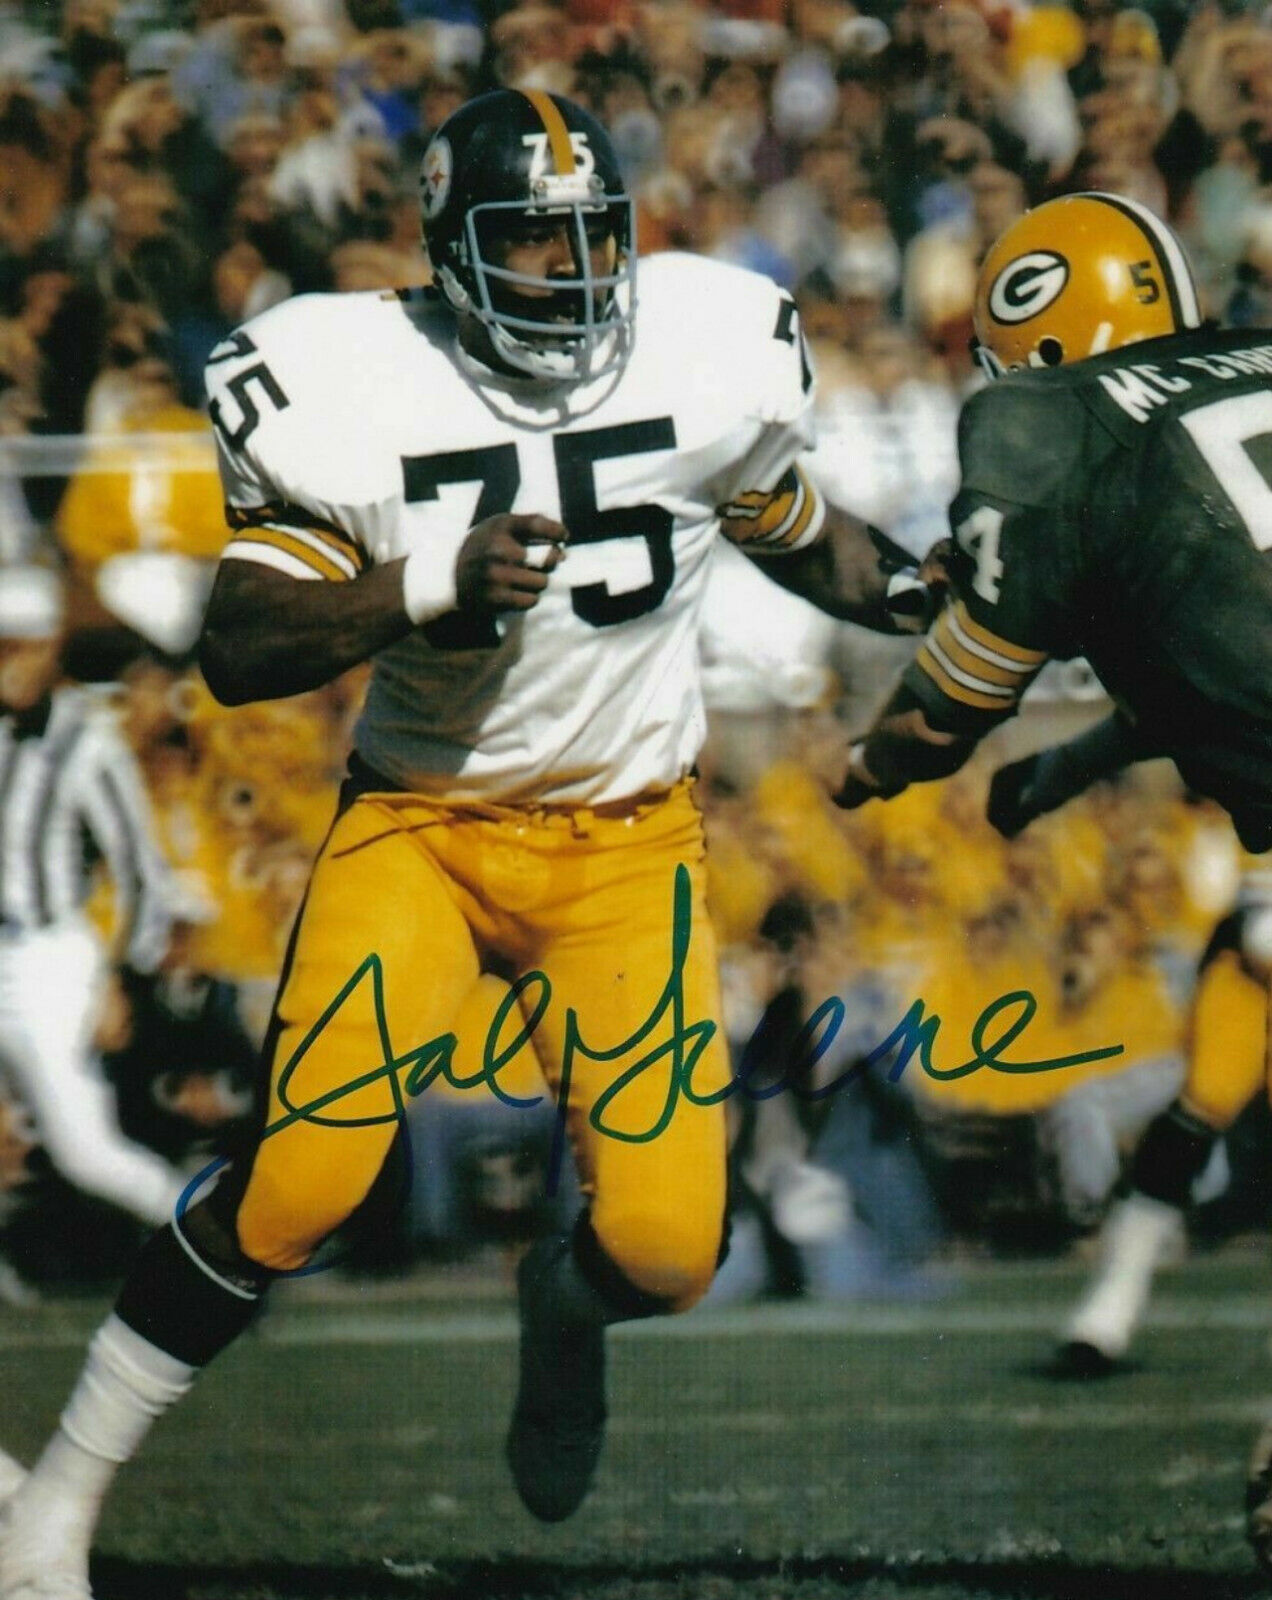 Mean Joe Greene Autographed Signed 8x10 Photo Poster painting NFL HOF Steelers REPRINT